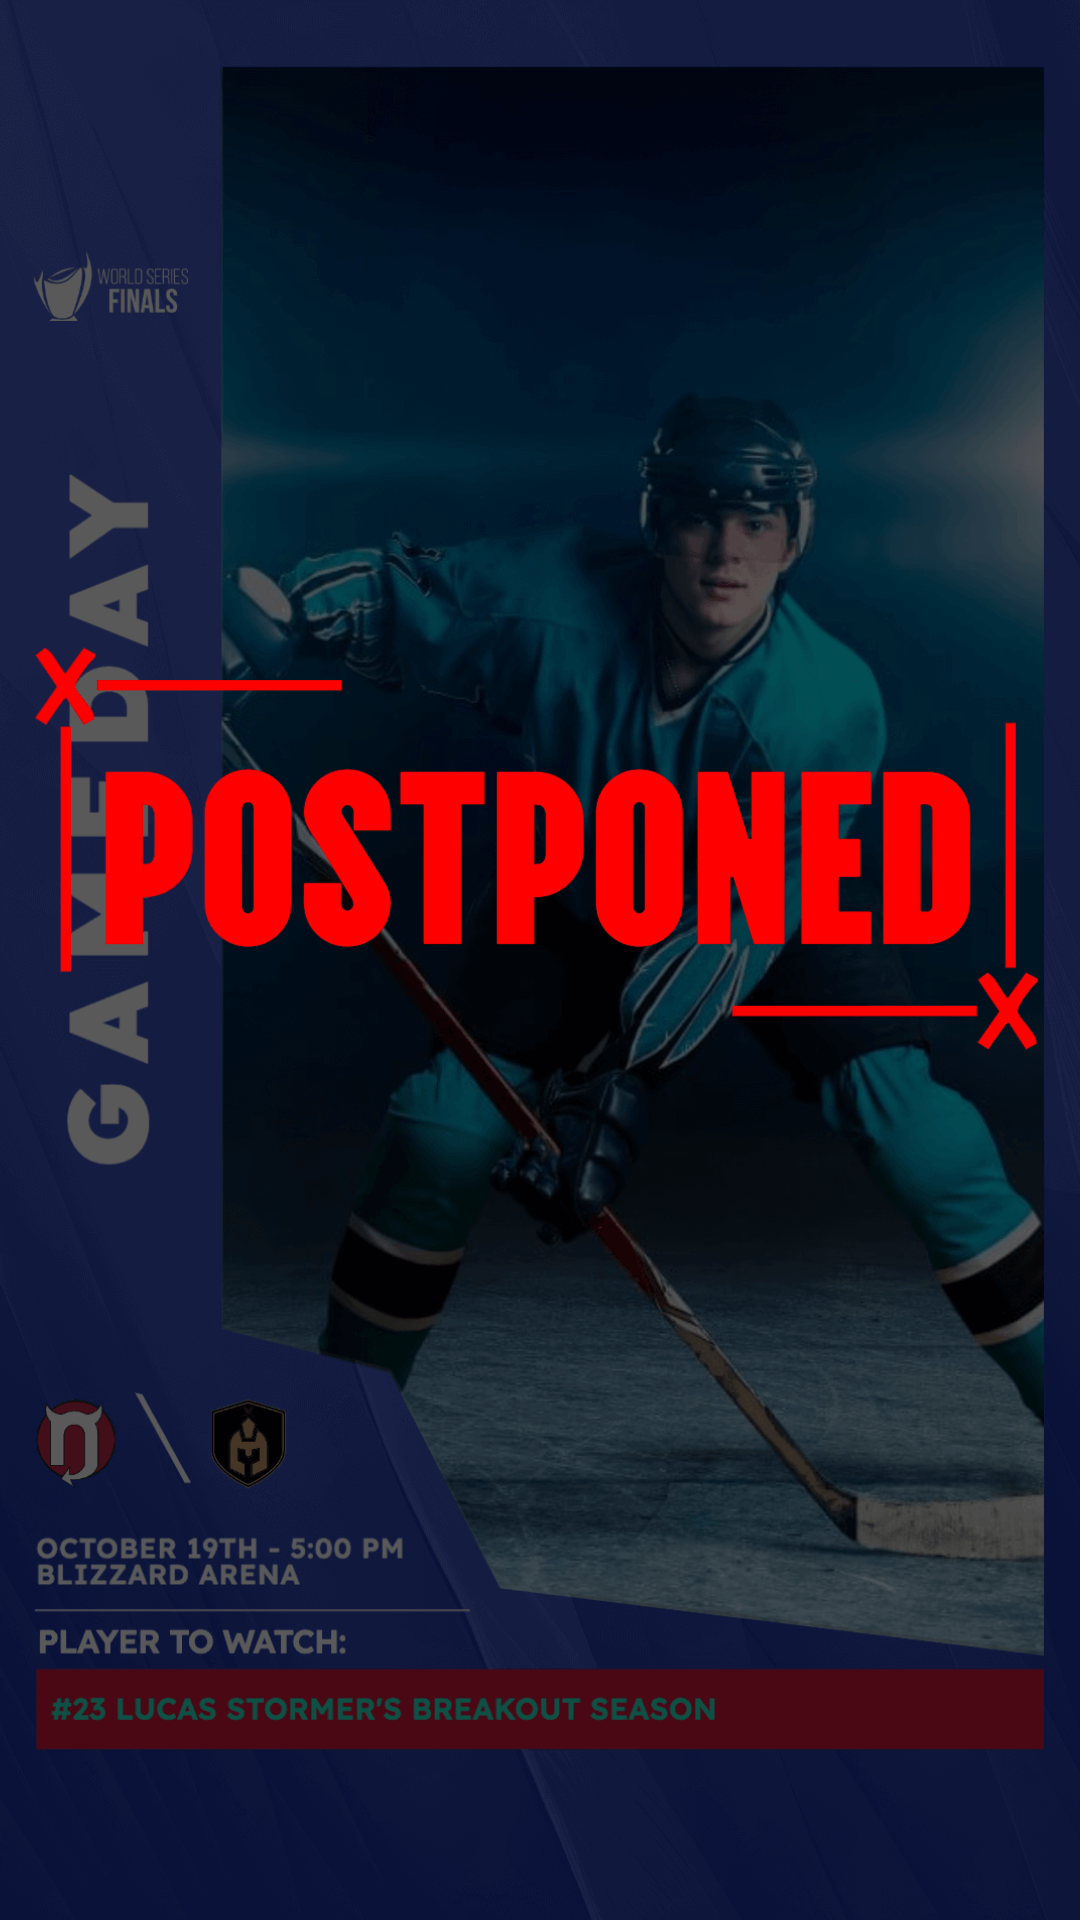 Postponed Hockey Match Editable Template